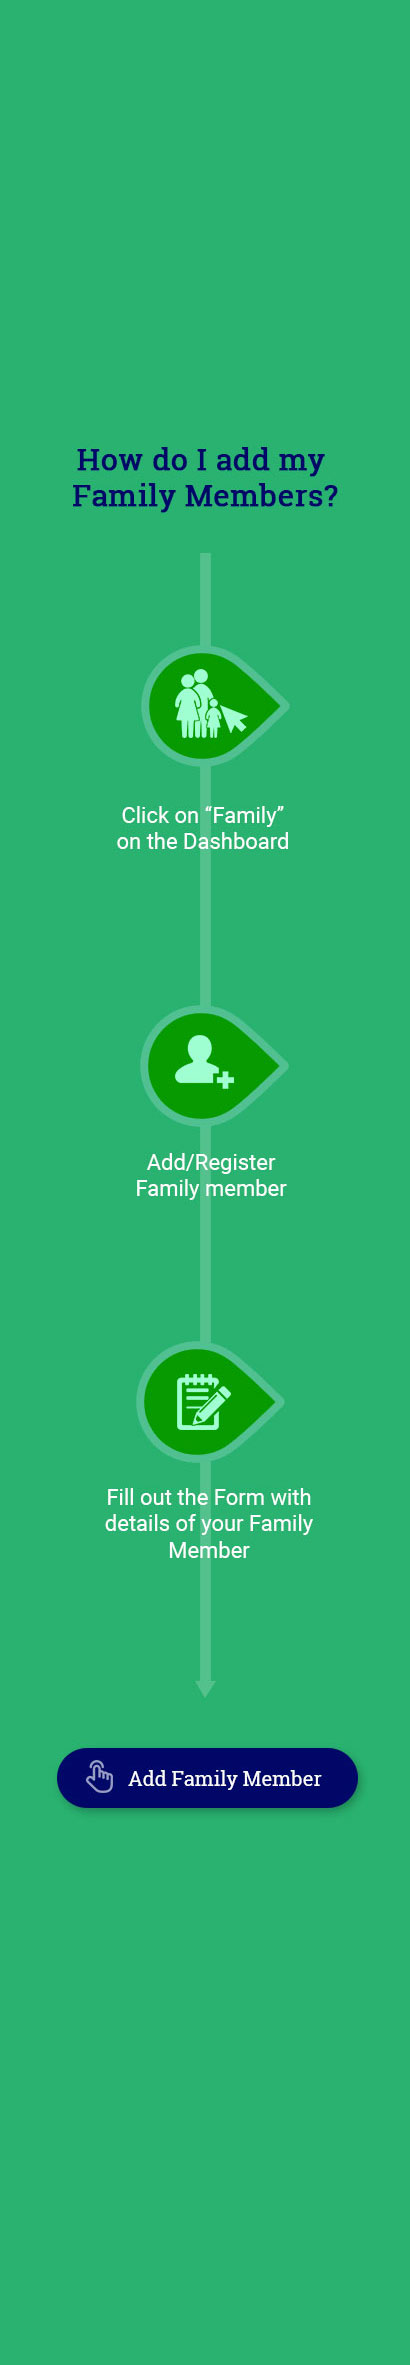 How do I add Family Members